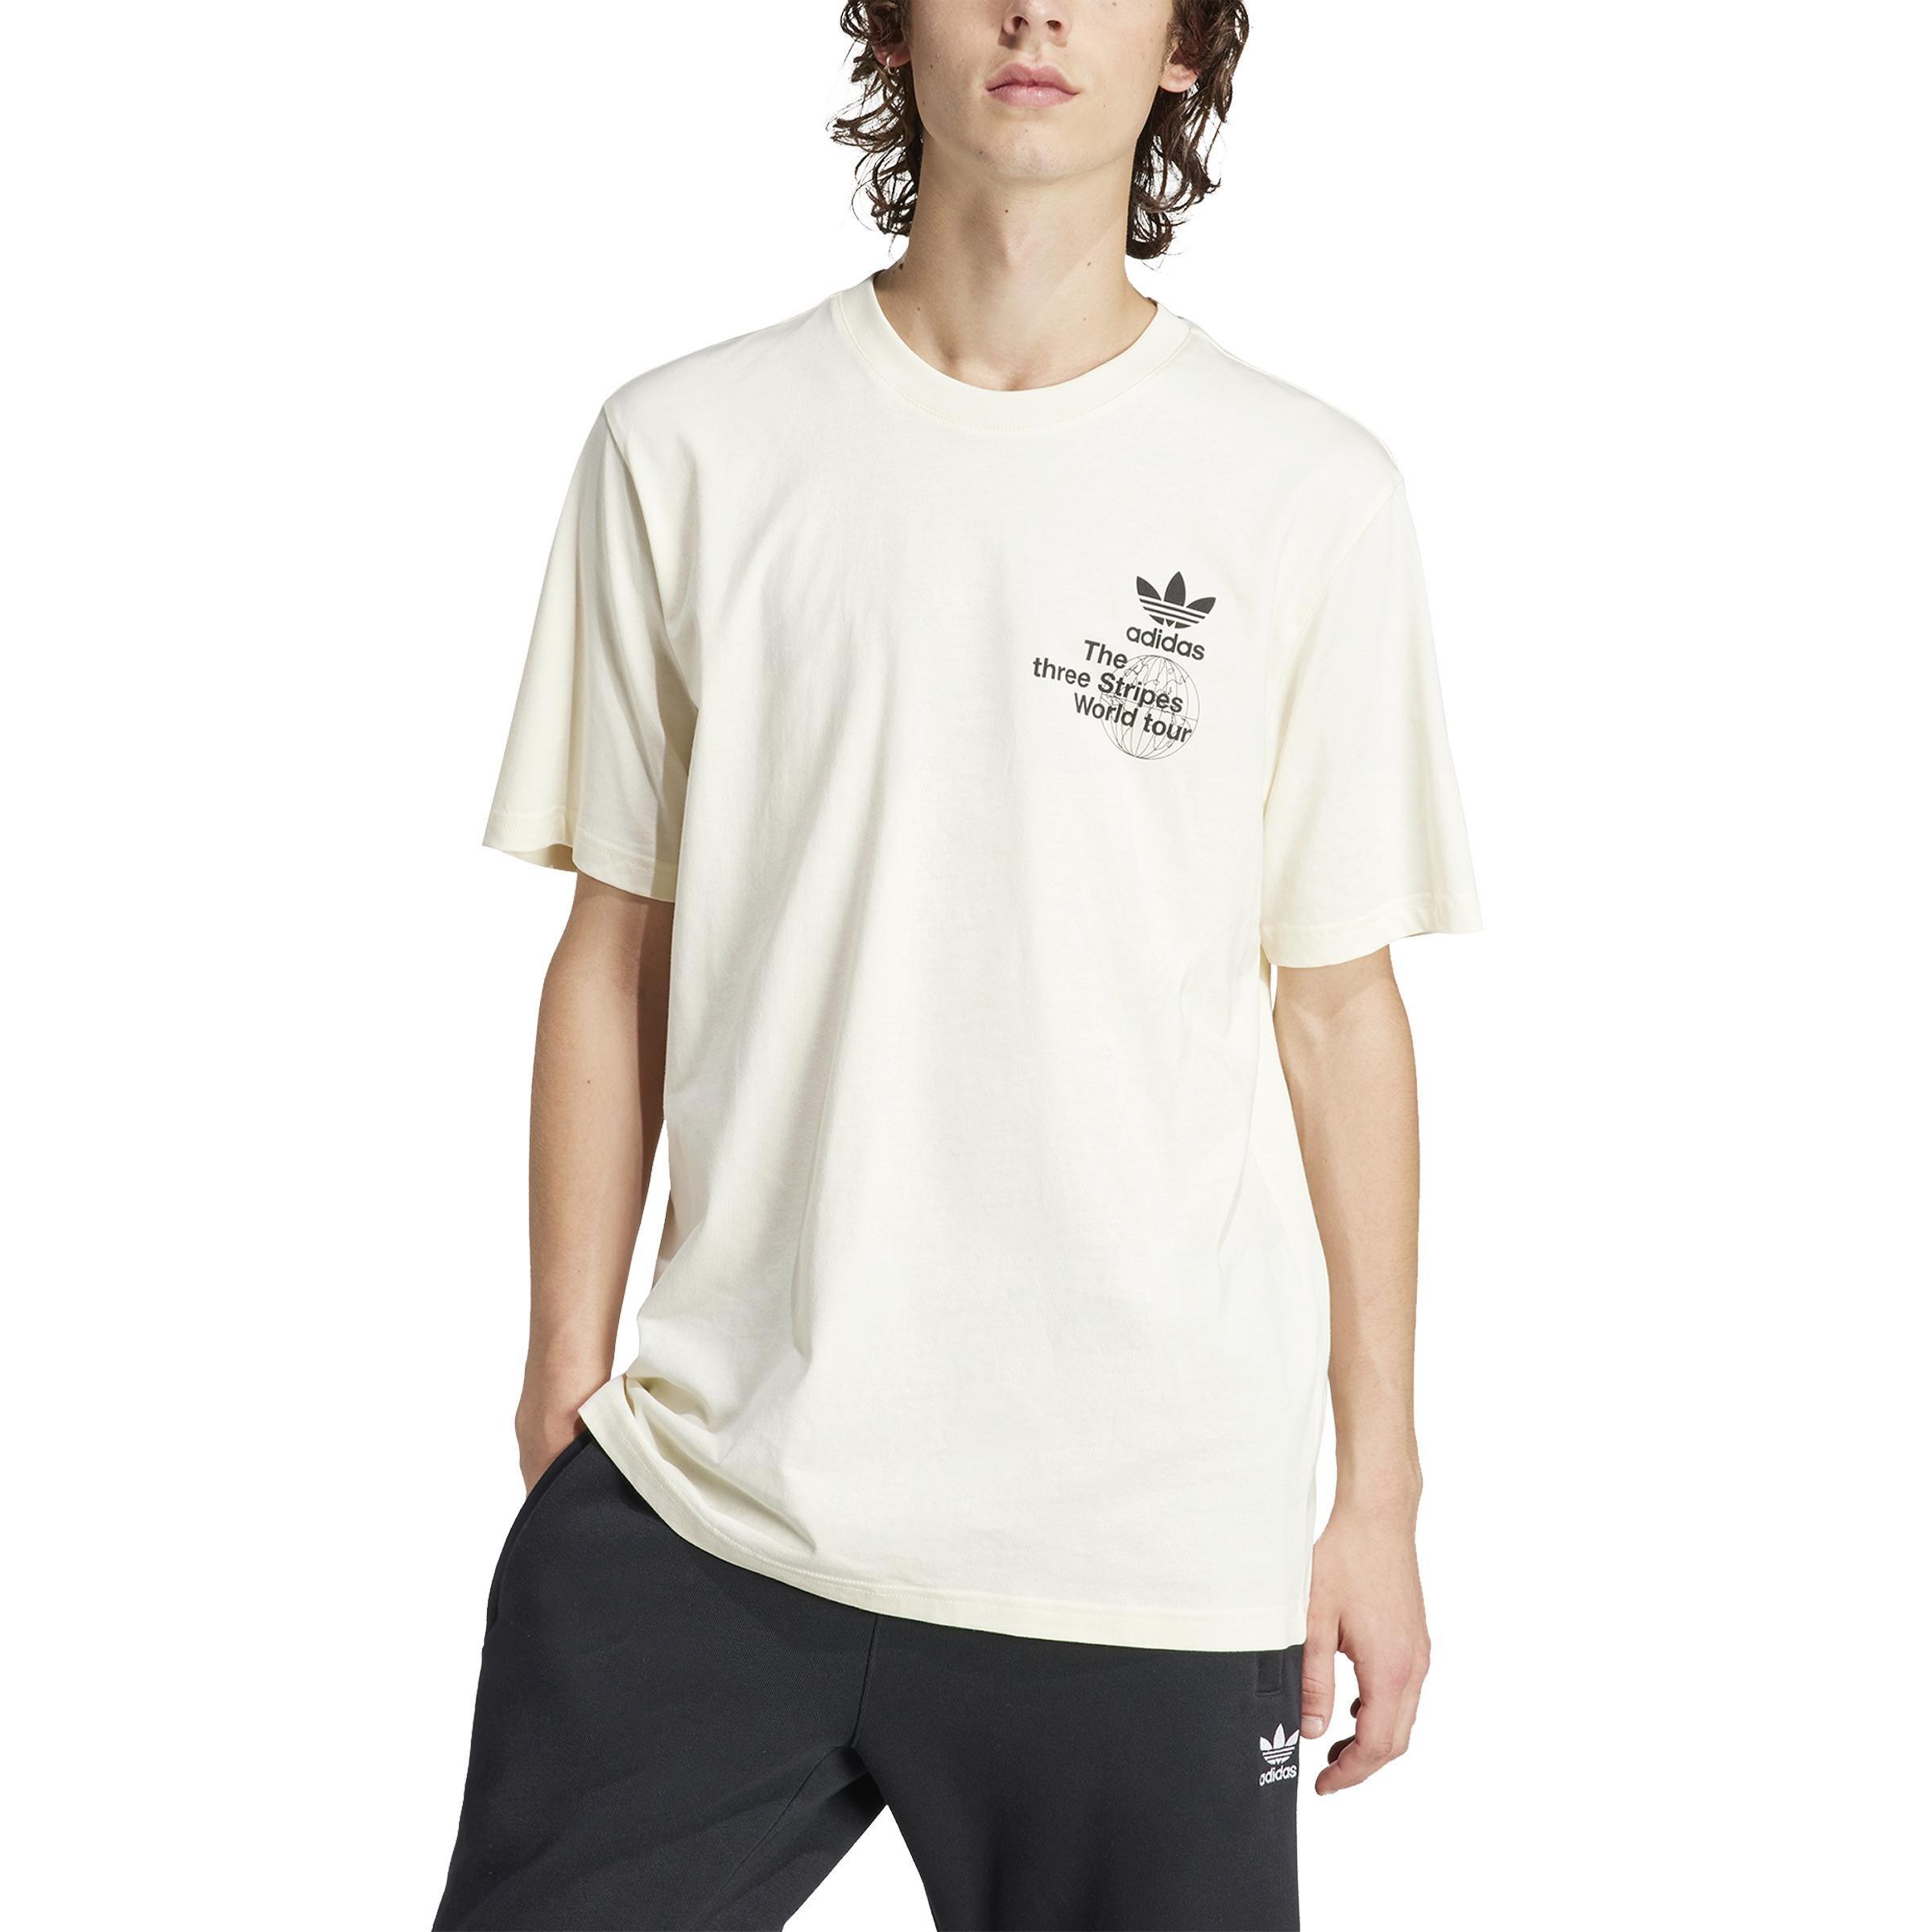 adidas - Men Bt Short Sleeve T-Shirt, White